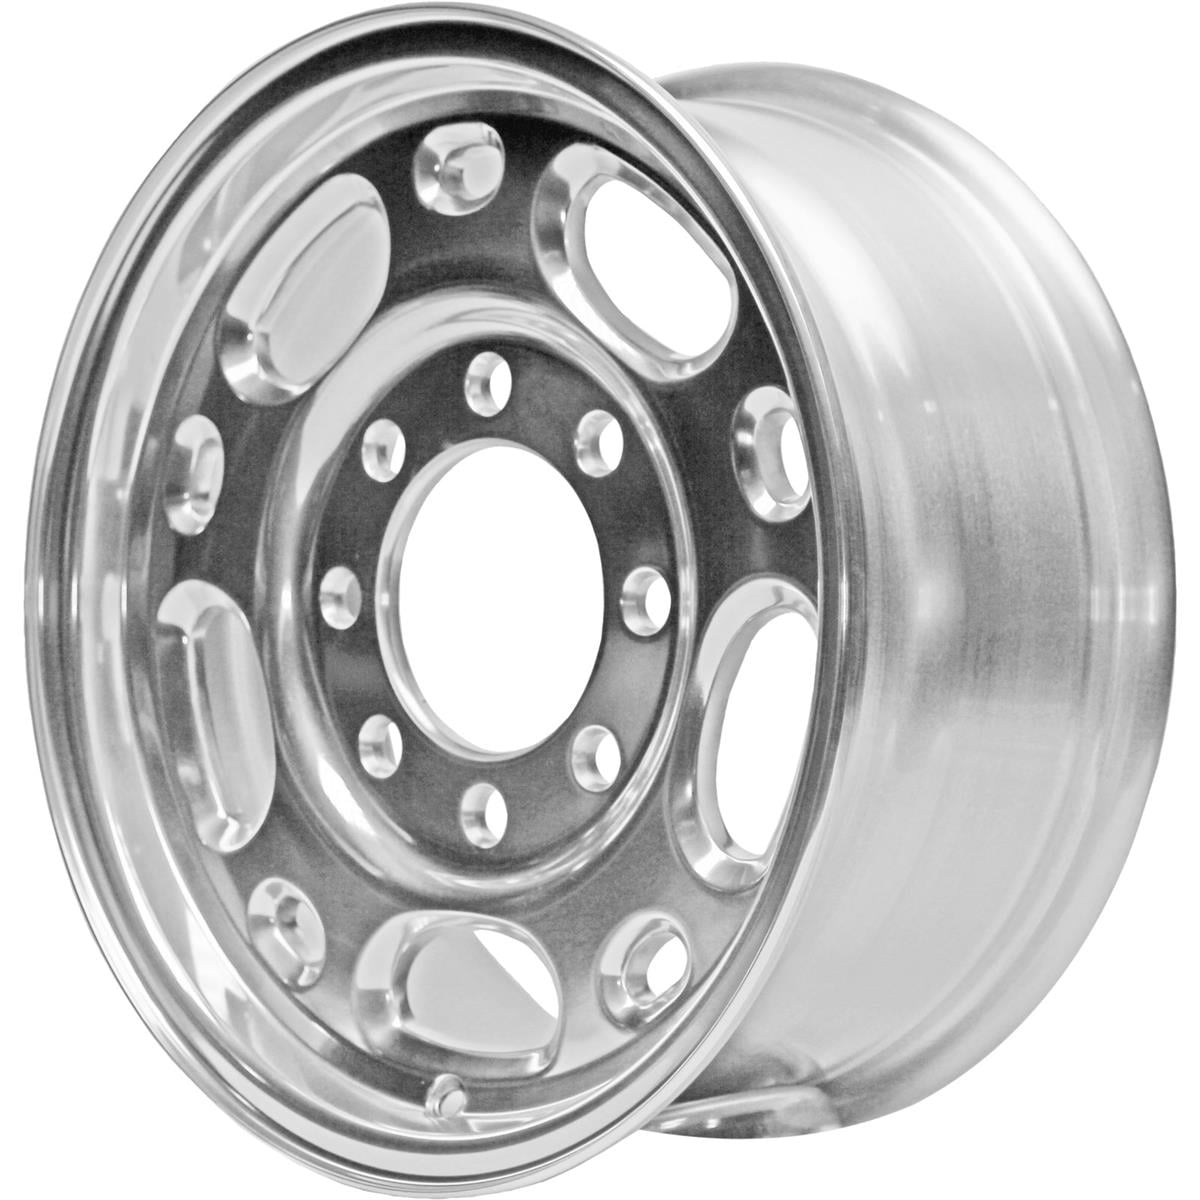 New Aluminum Reproduction Wheel fits Silverado Sierra 2500 ALY05079U80N